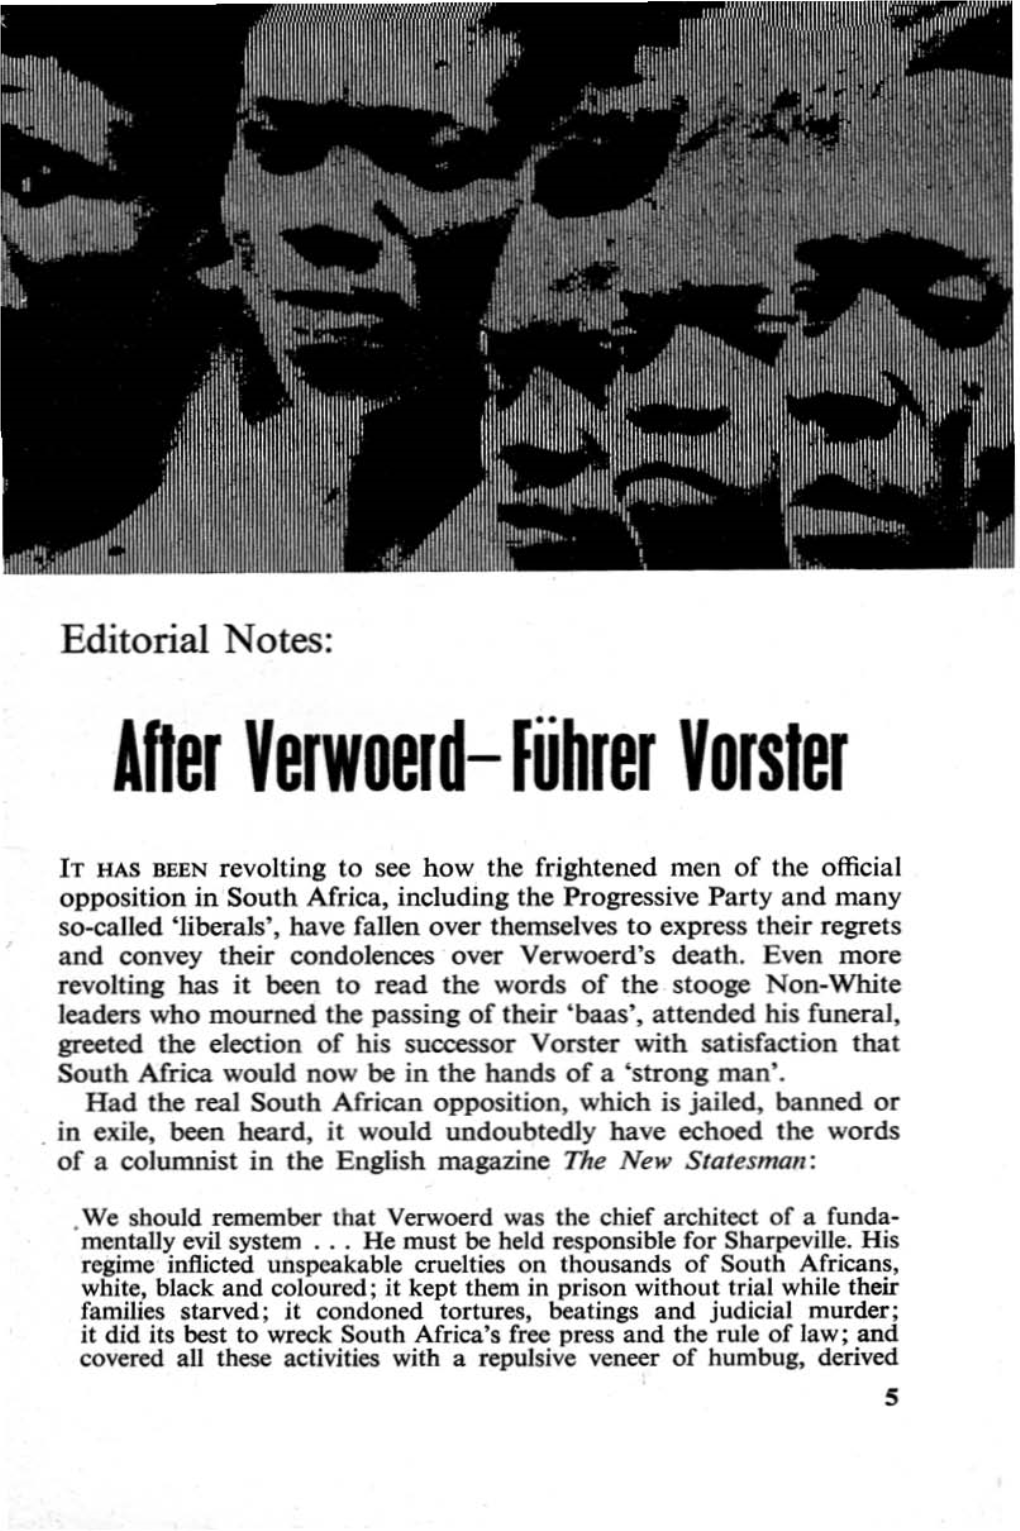 Editorial Notes: Aler Yerwuerd- Fuhrer Yursler